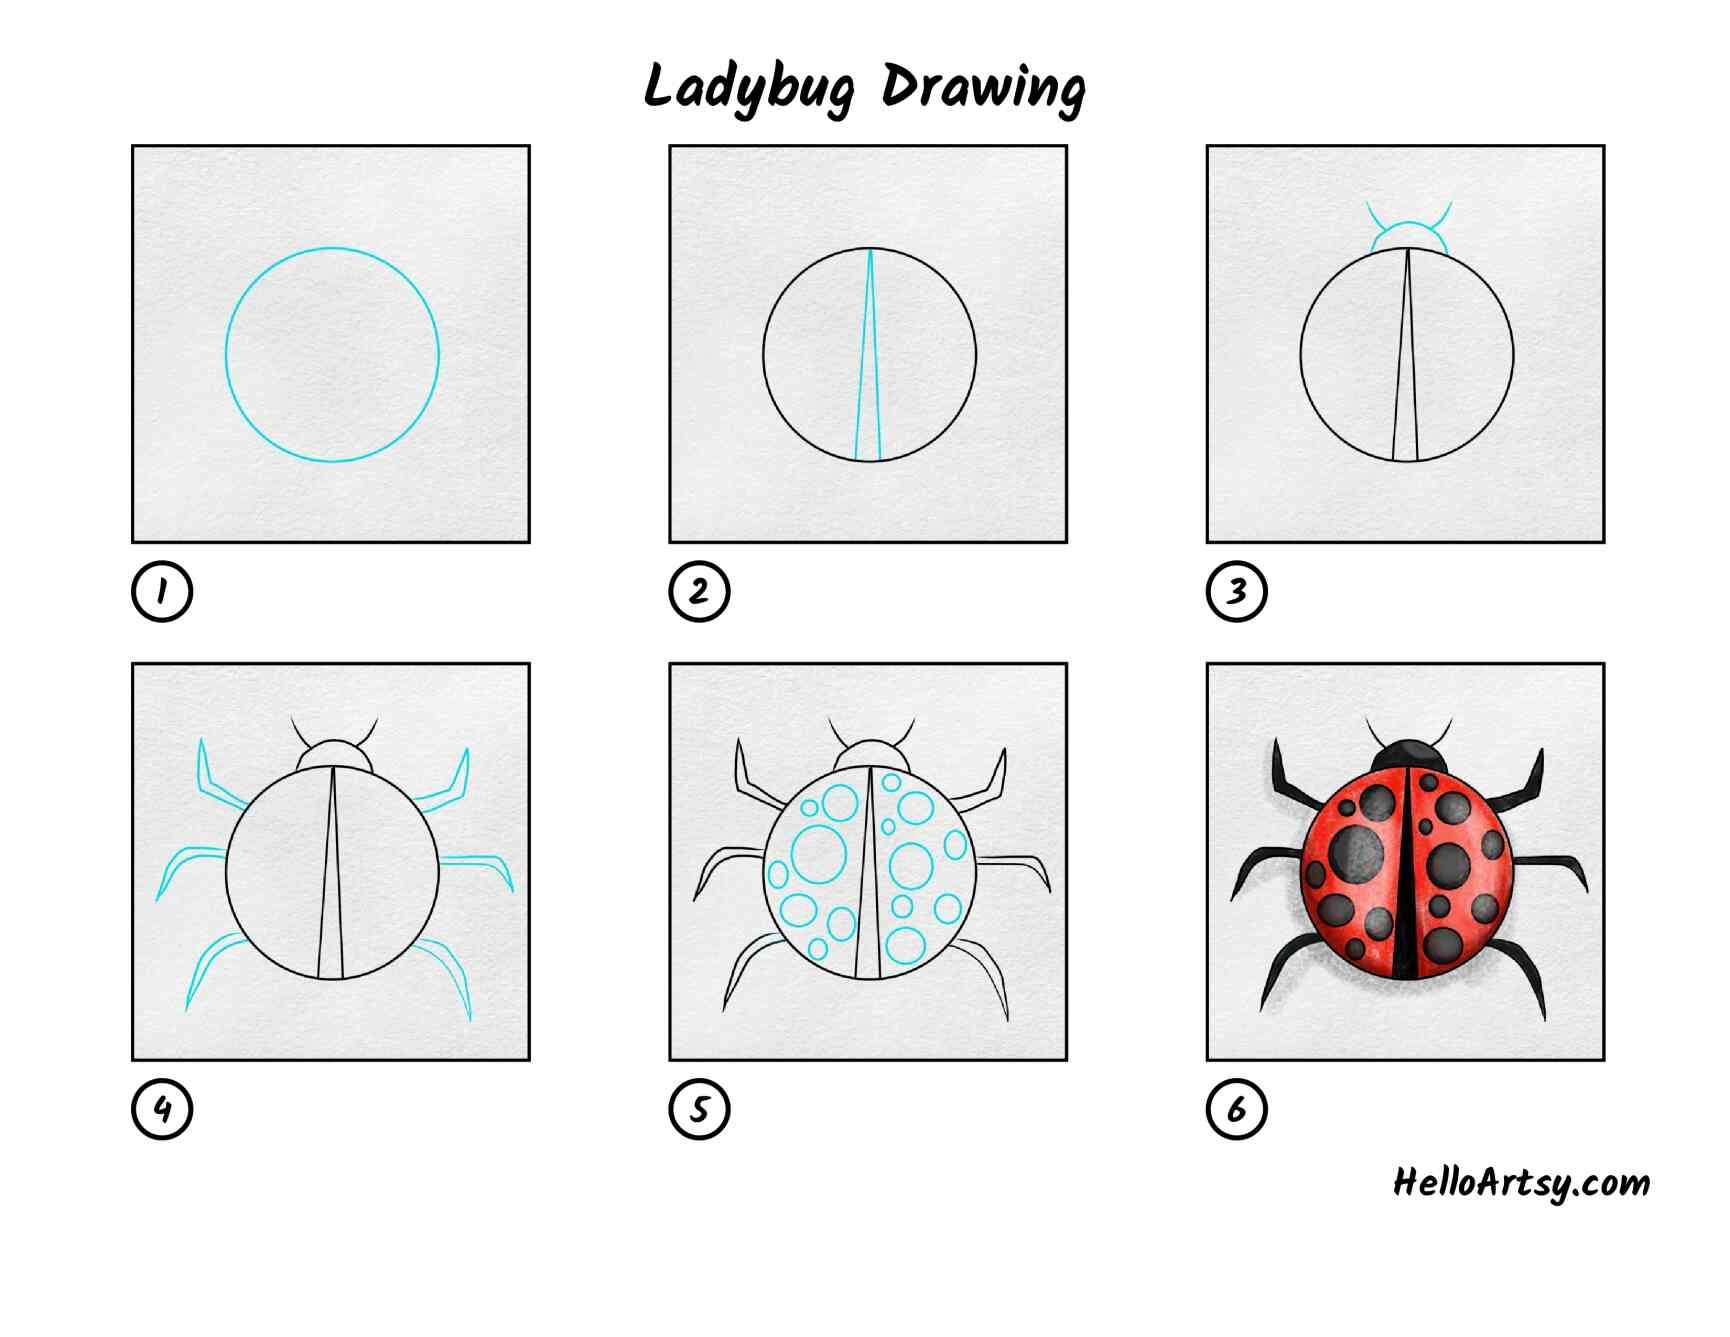 Ladybug idea 6 Drawing Ideas